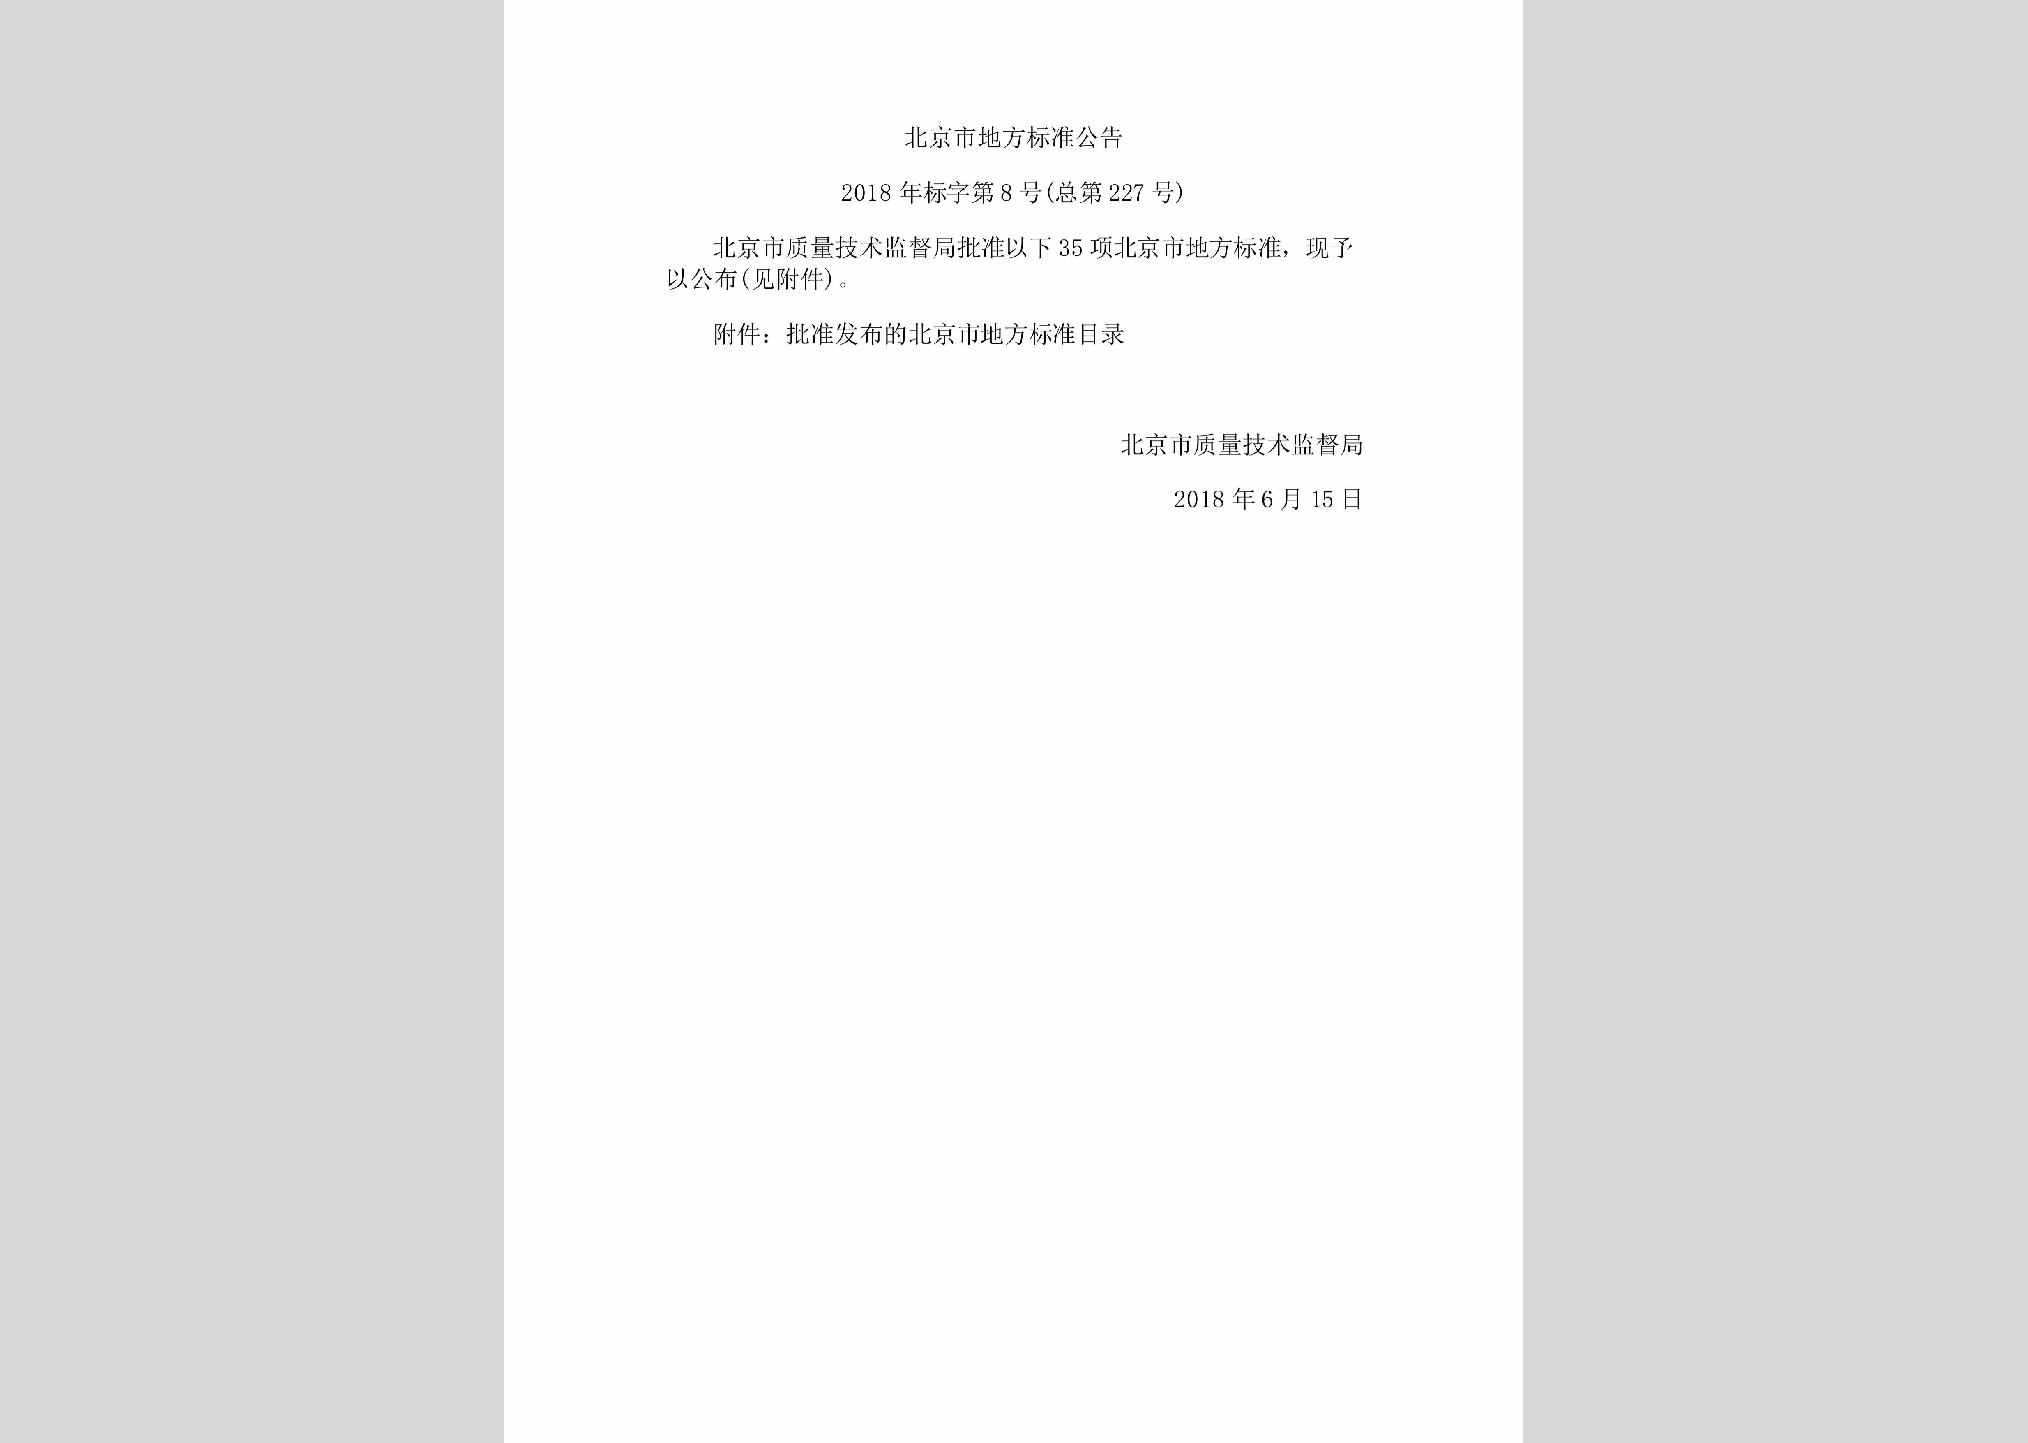 BJ-DBZGG-2018：北京市地方标准公告